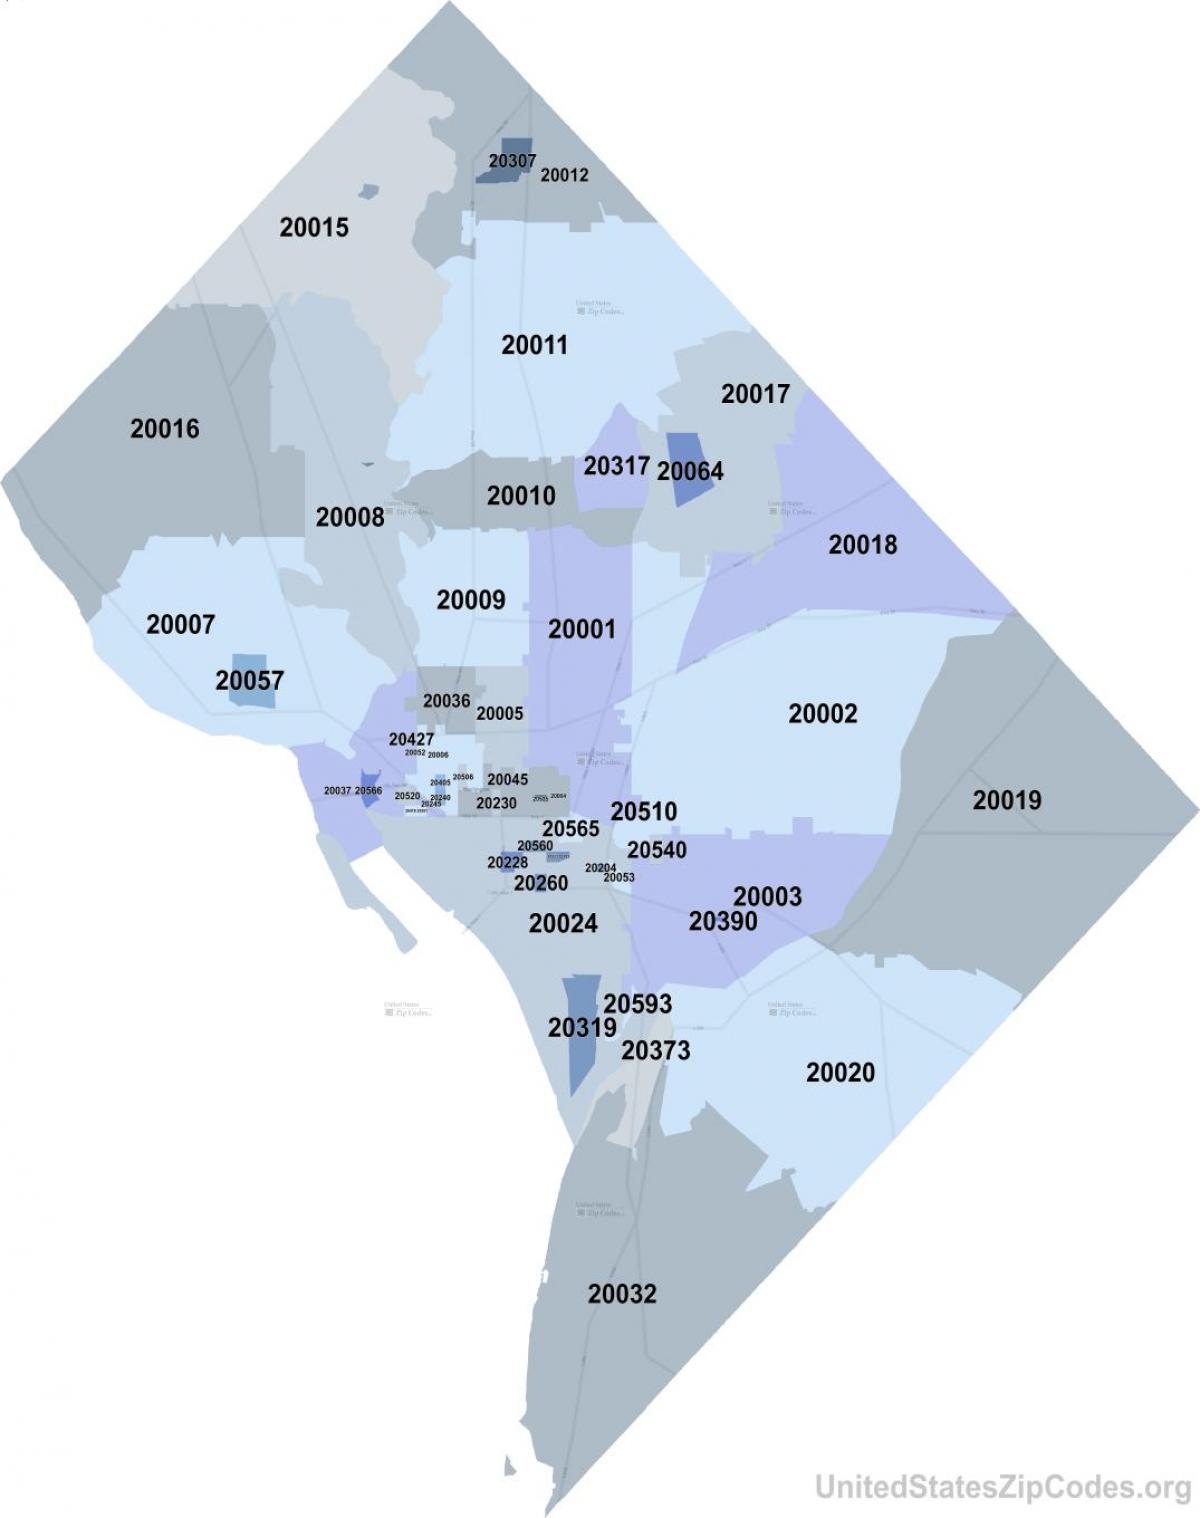 Mapa de códigos postales de Washington DC